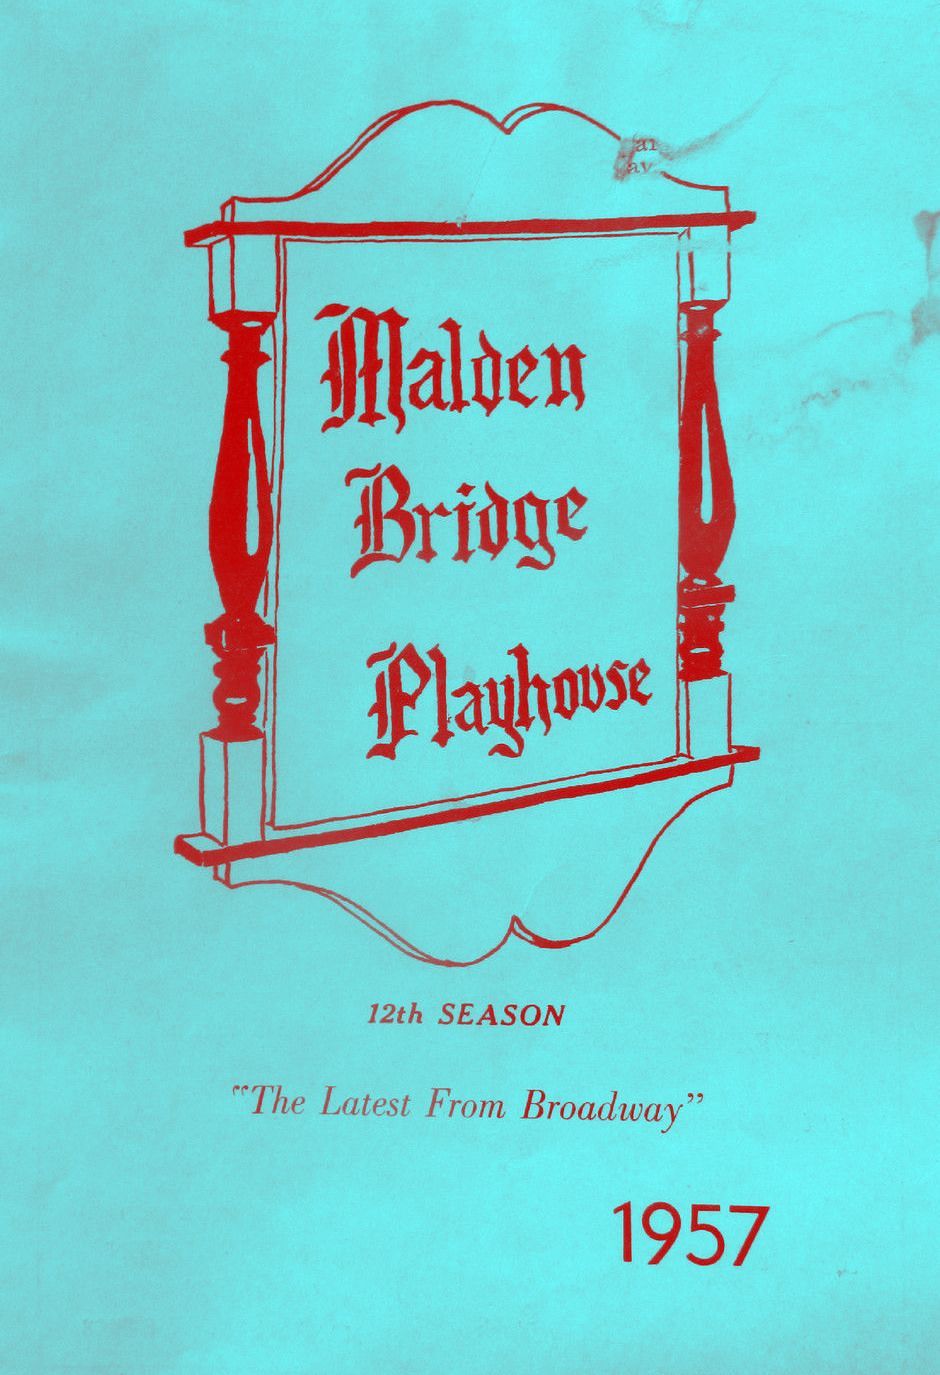 Front cover of Malden Bridge Playhouse 1957 program.